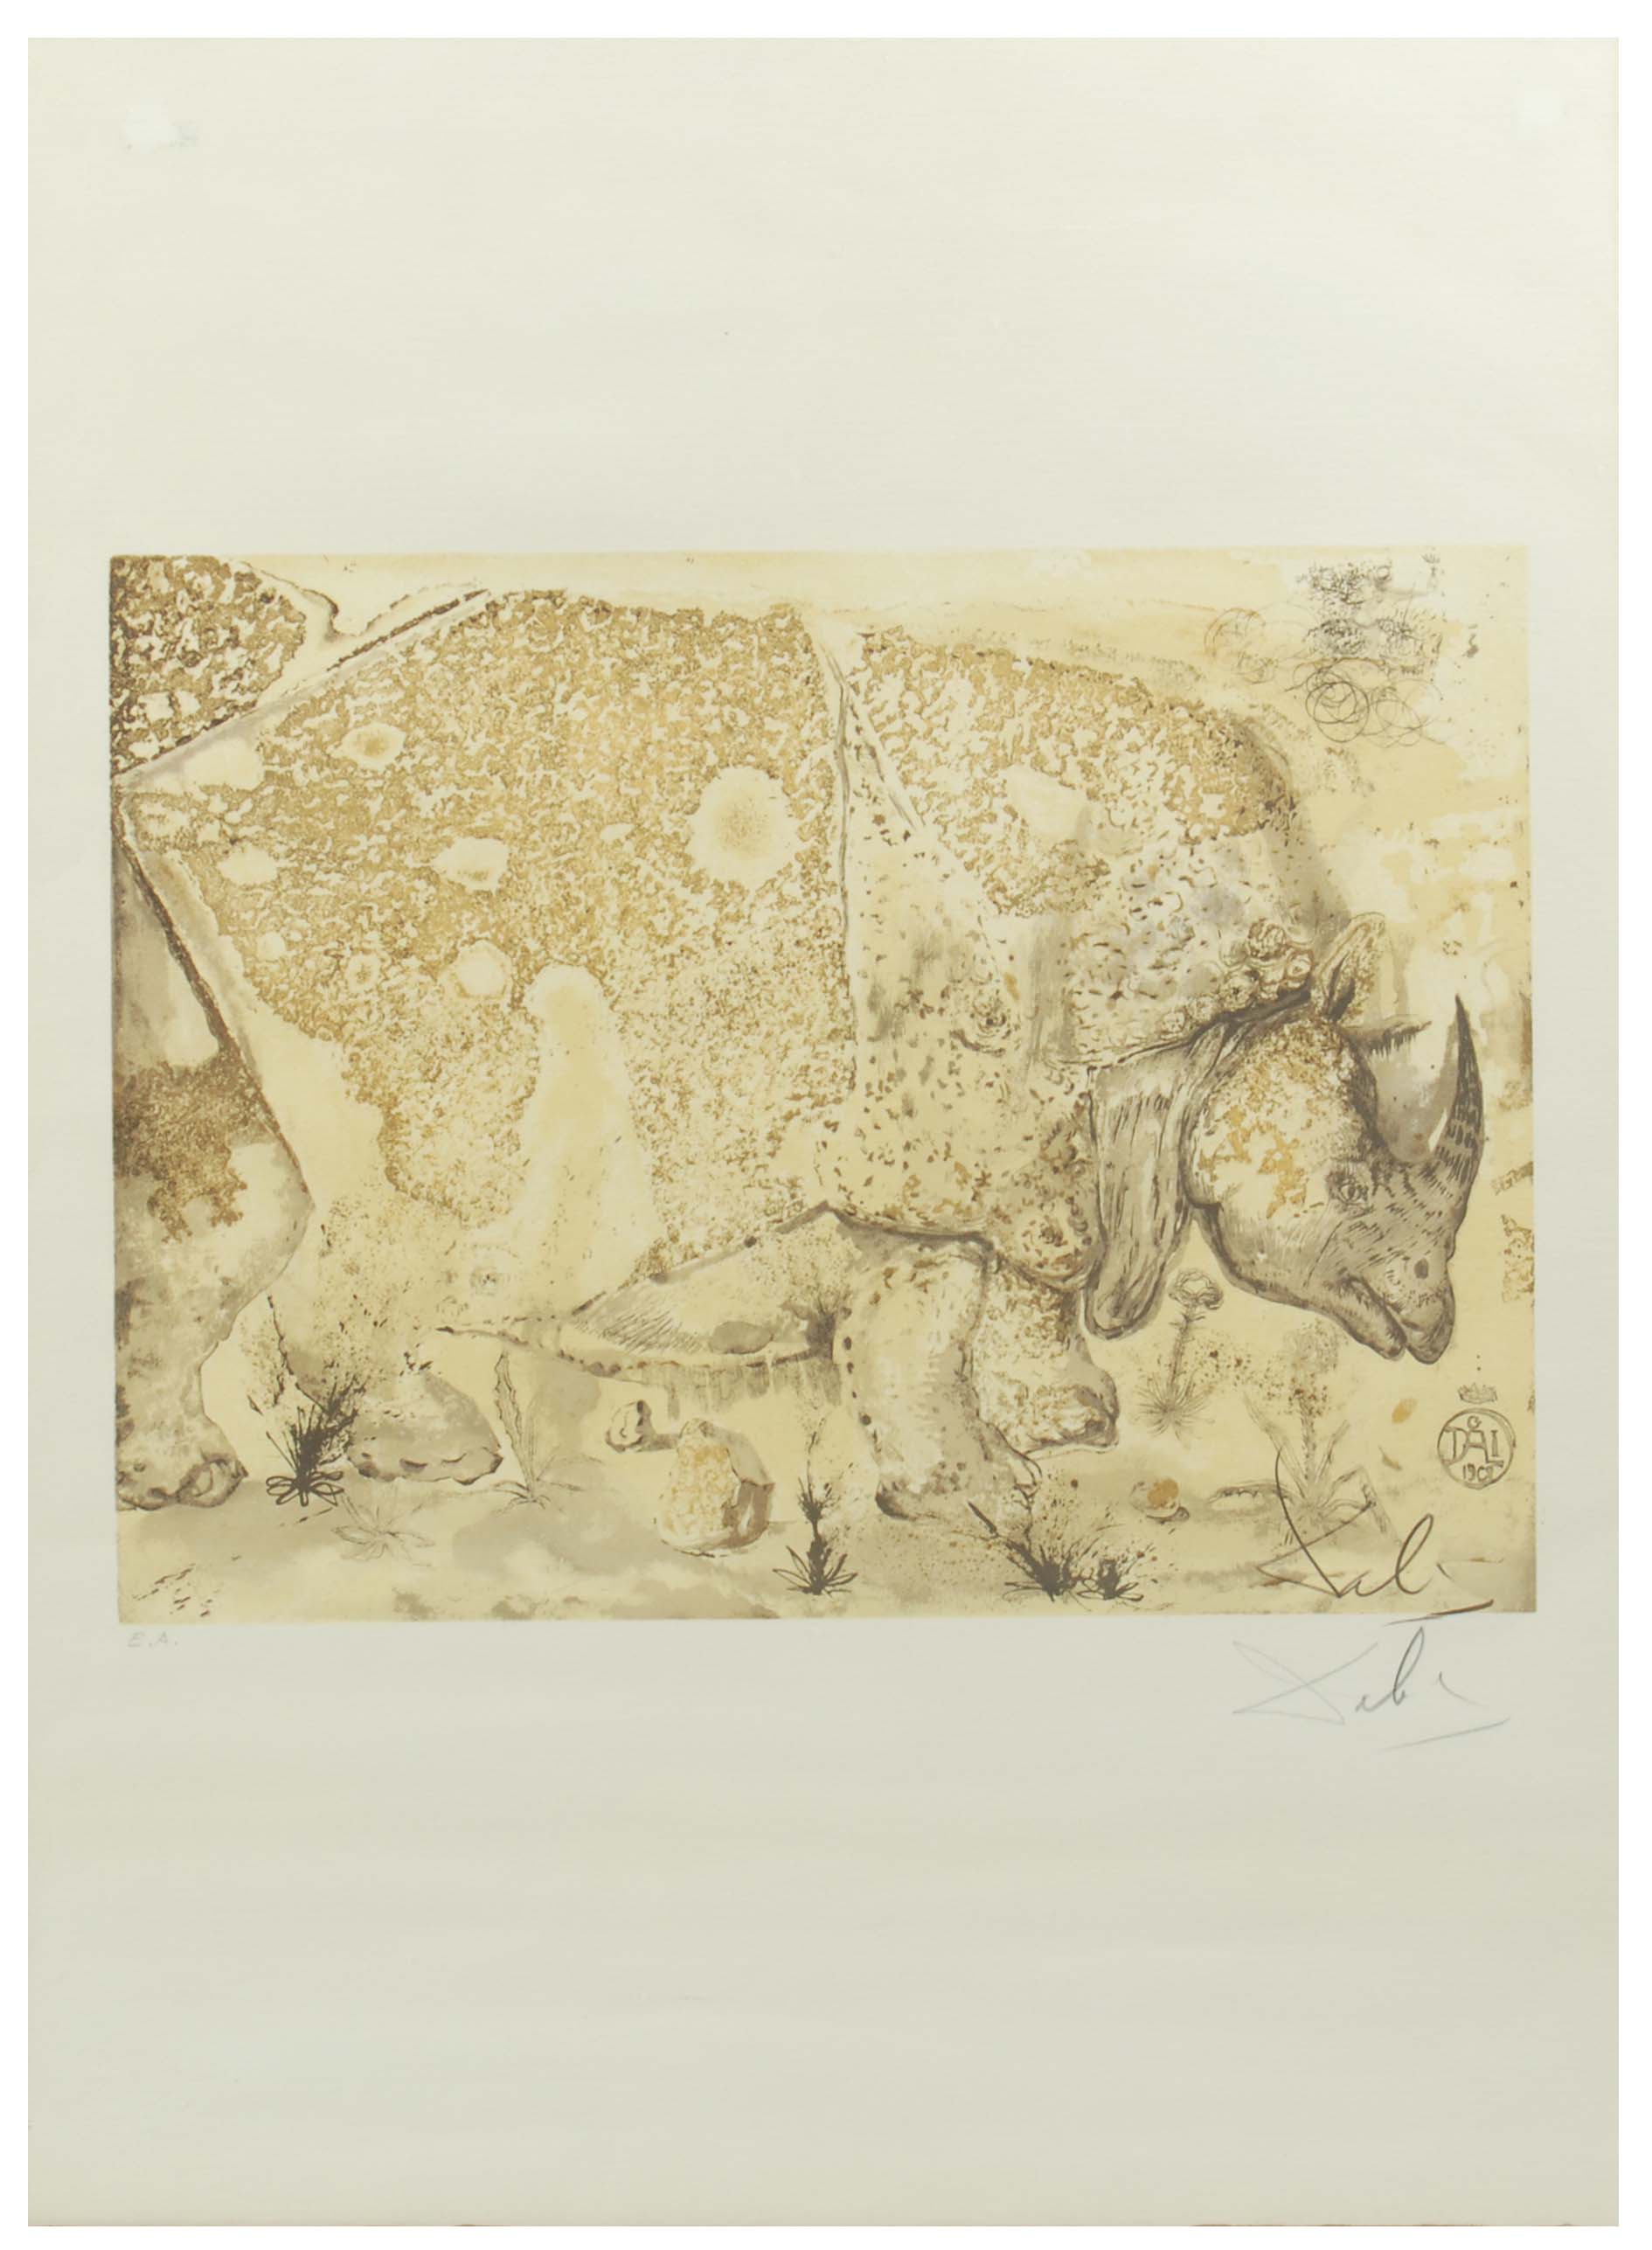 SALVADOR DALÍ I DOMÈNECH (1904-1989), Rinoceronte., Litogra